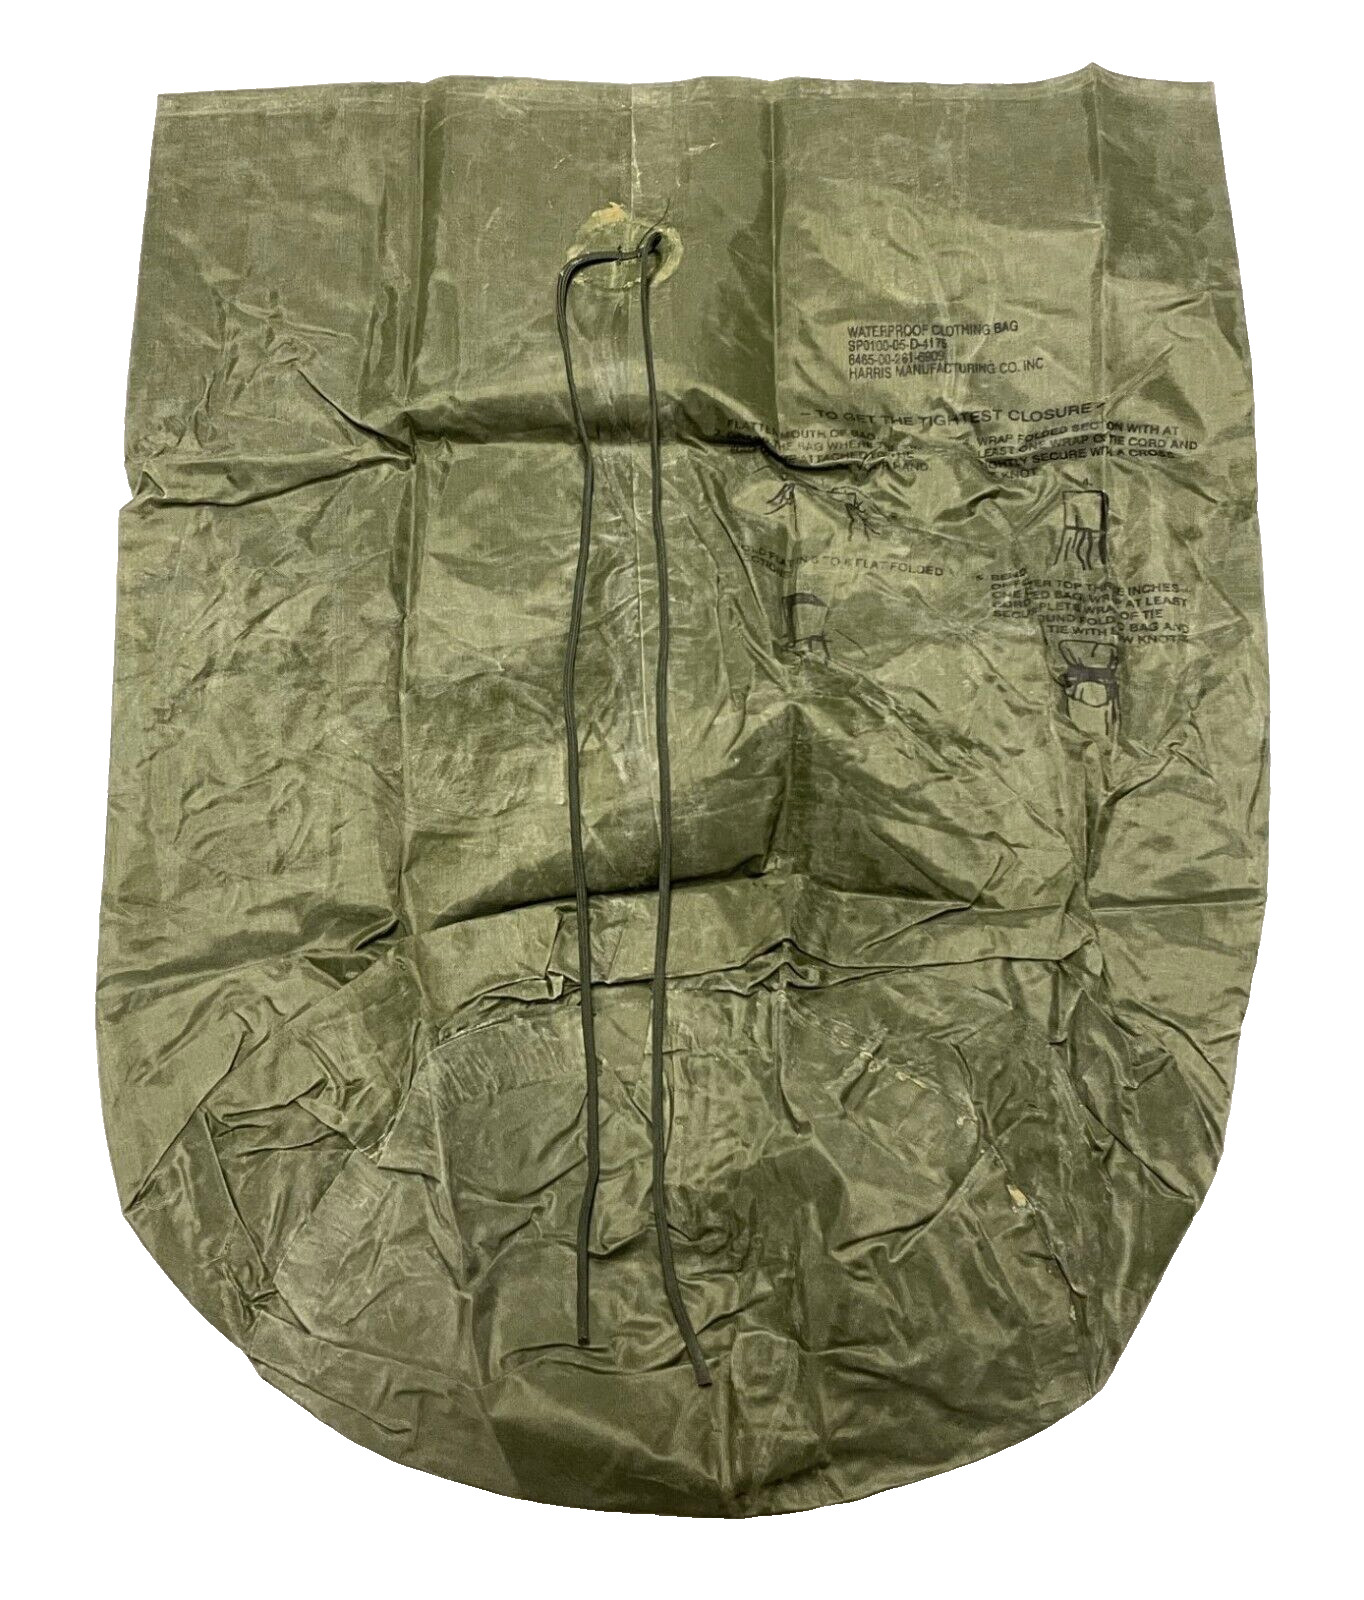 NEW USGI Military WATERPROOF WET WEATHER LAUNDRY BAG Clothing Gear Bag